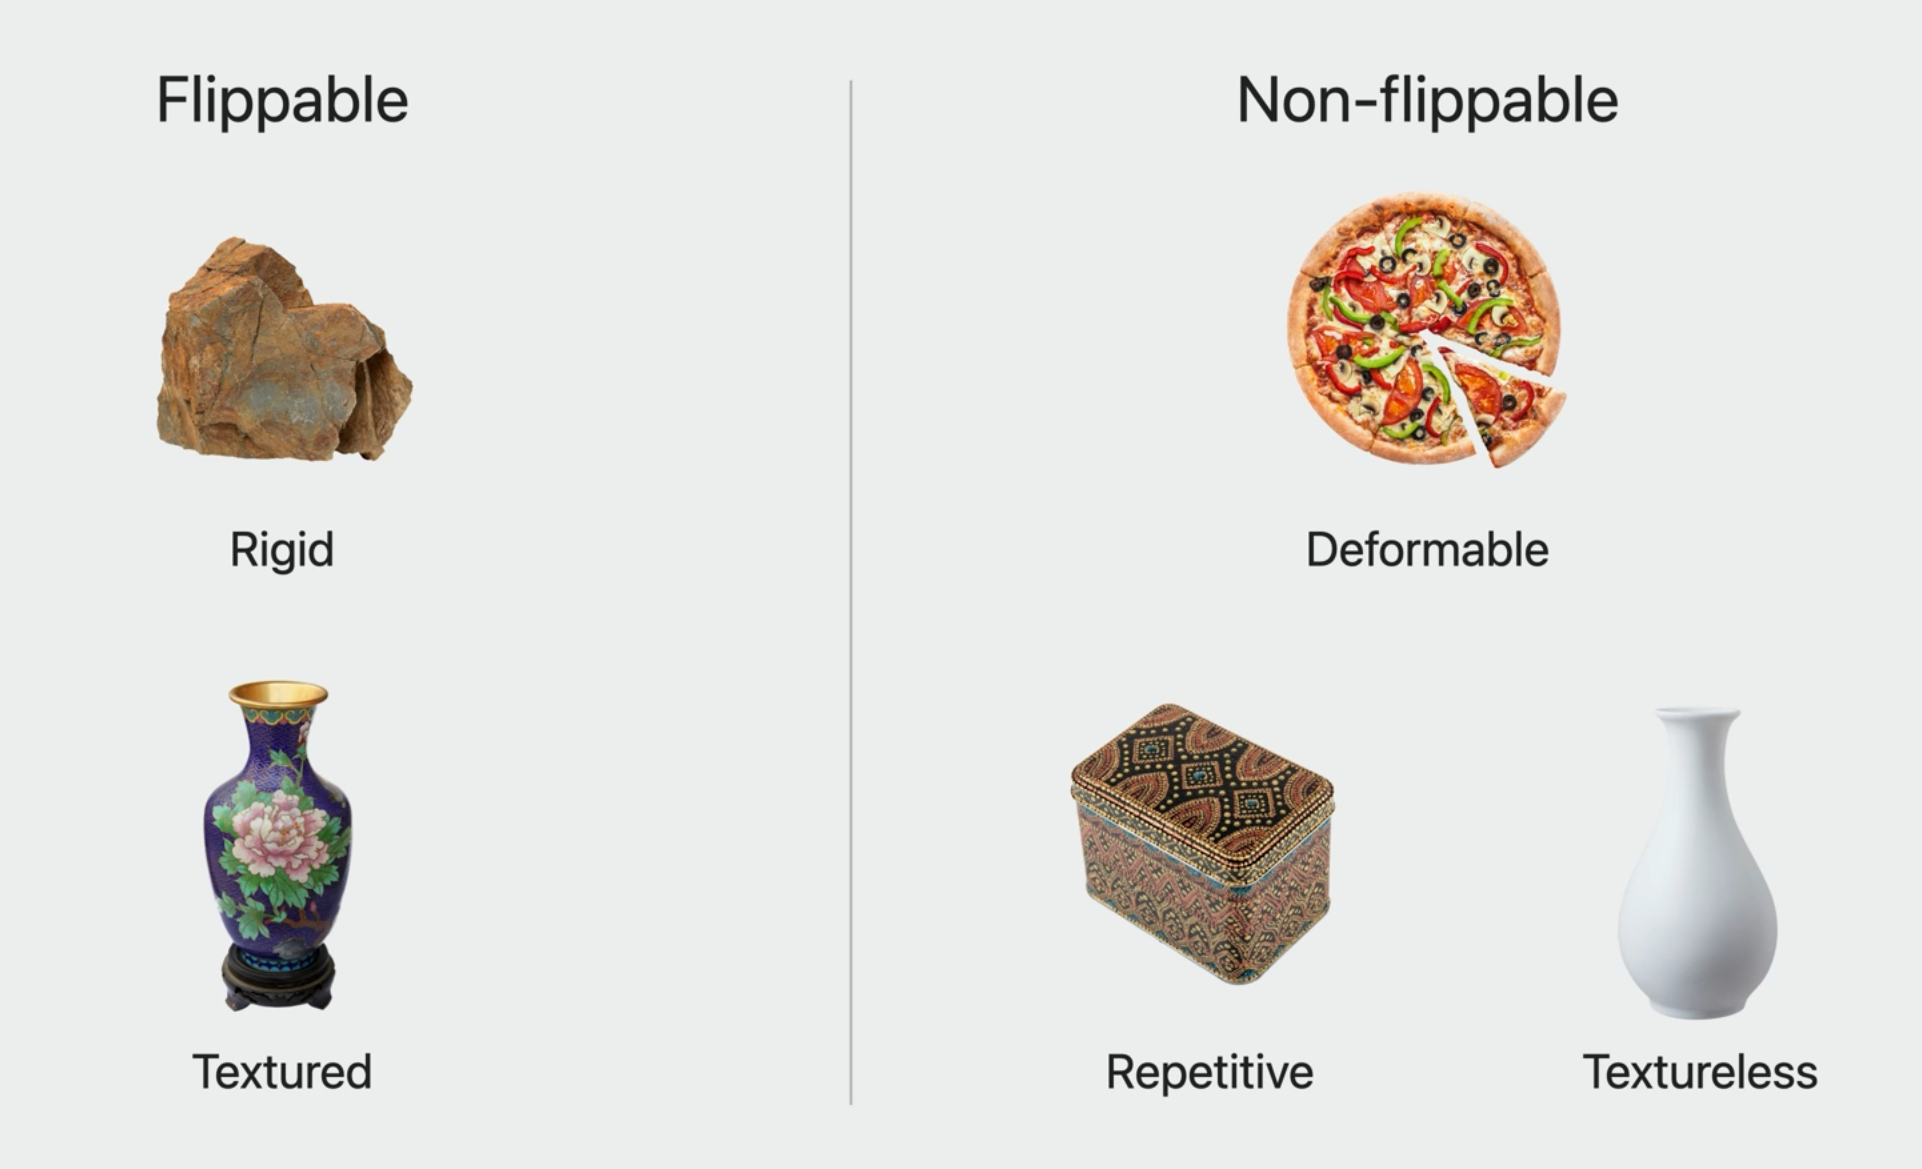 Flippable vs Non-flipabble objects